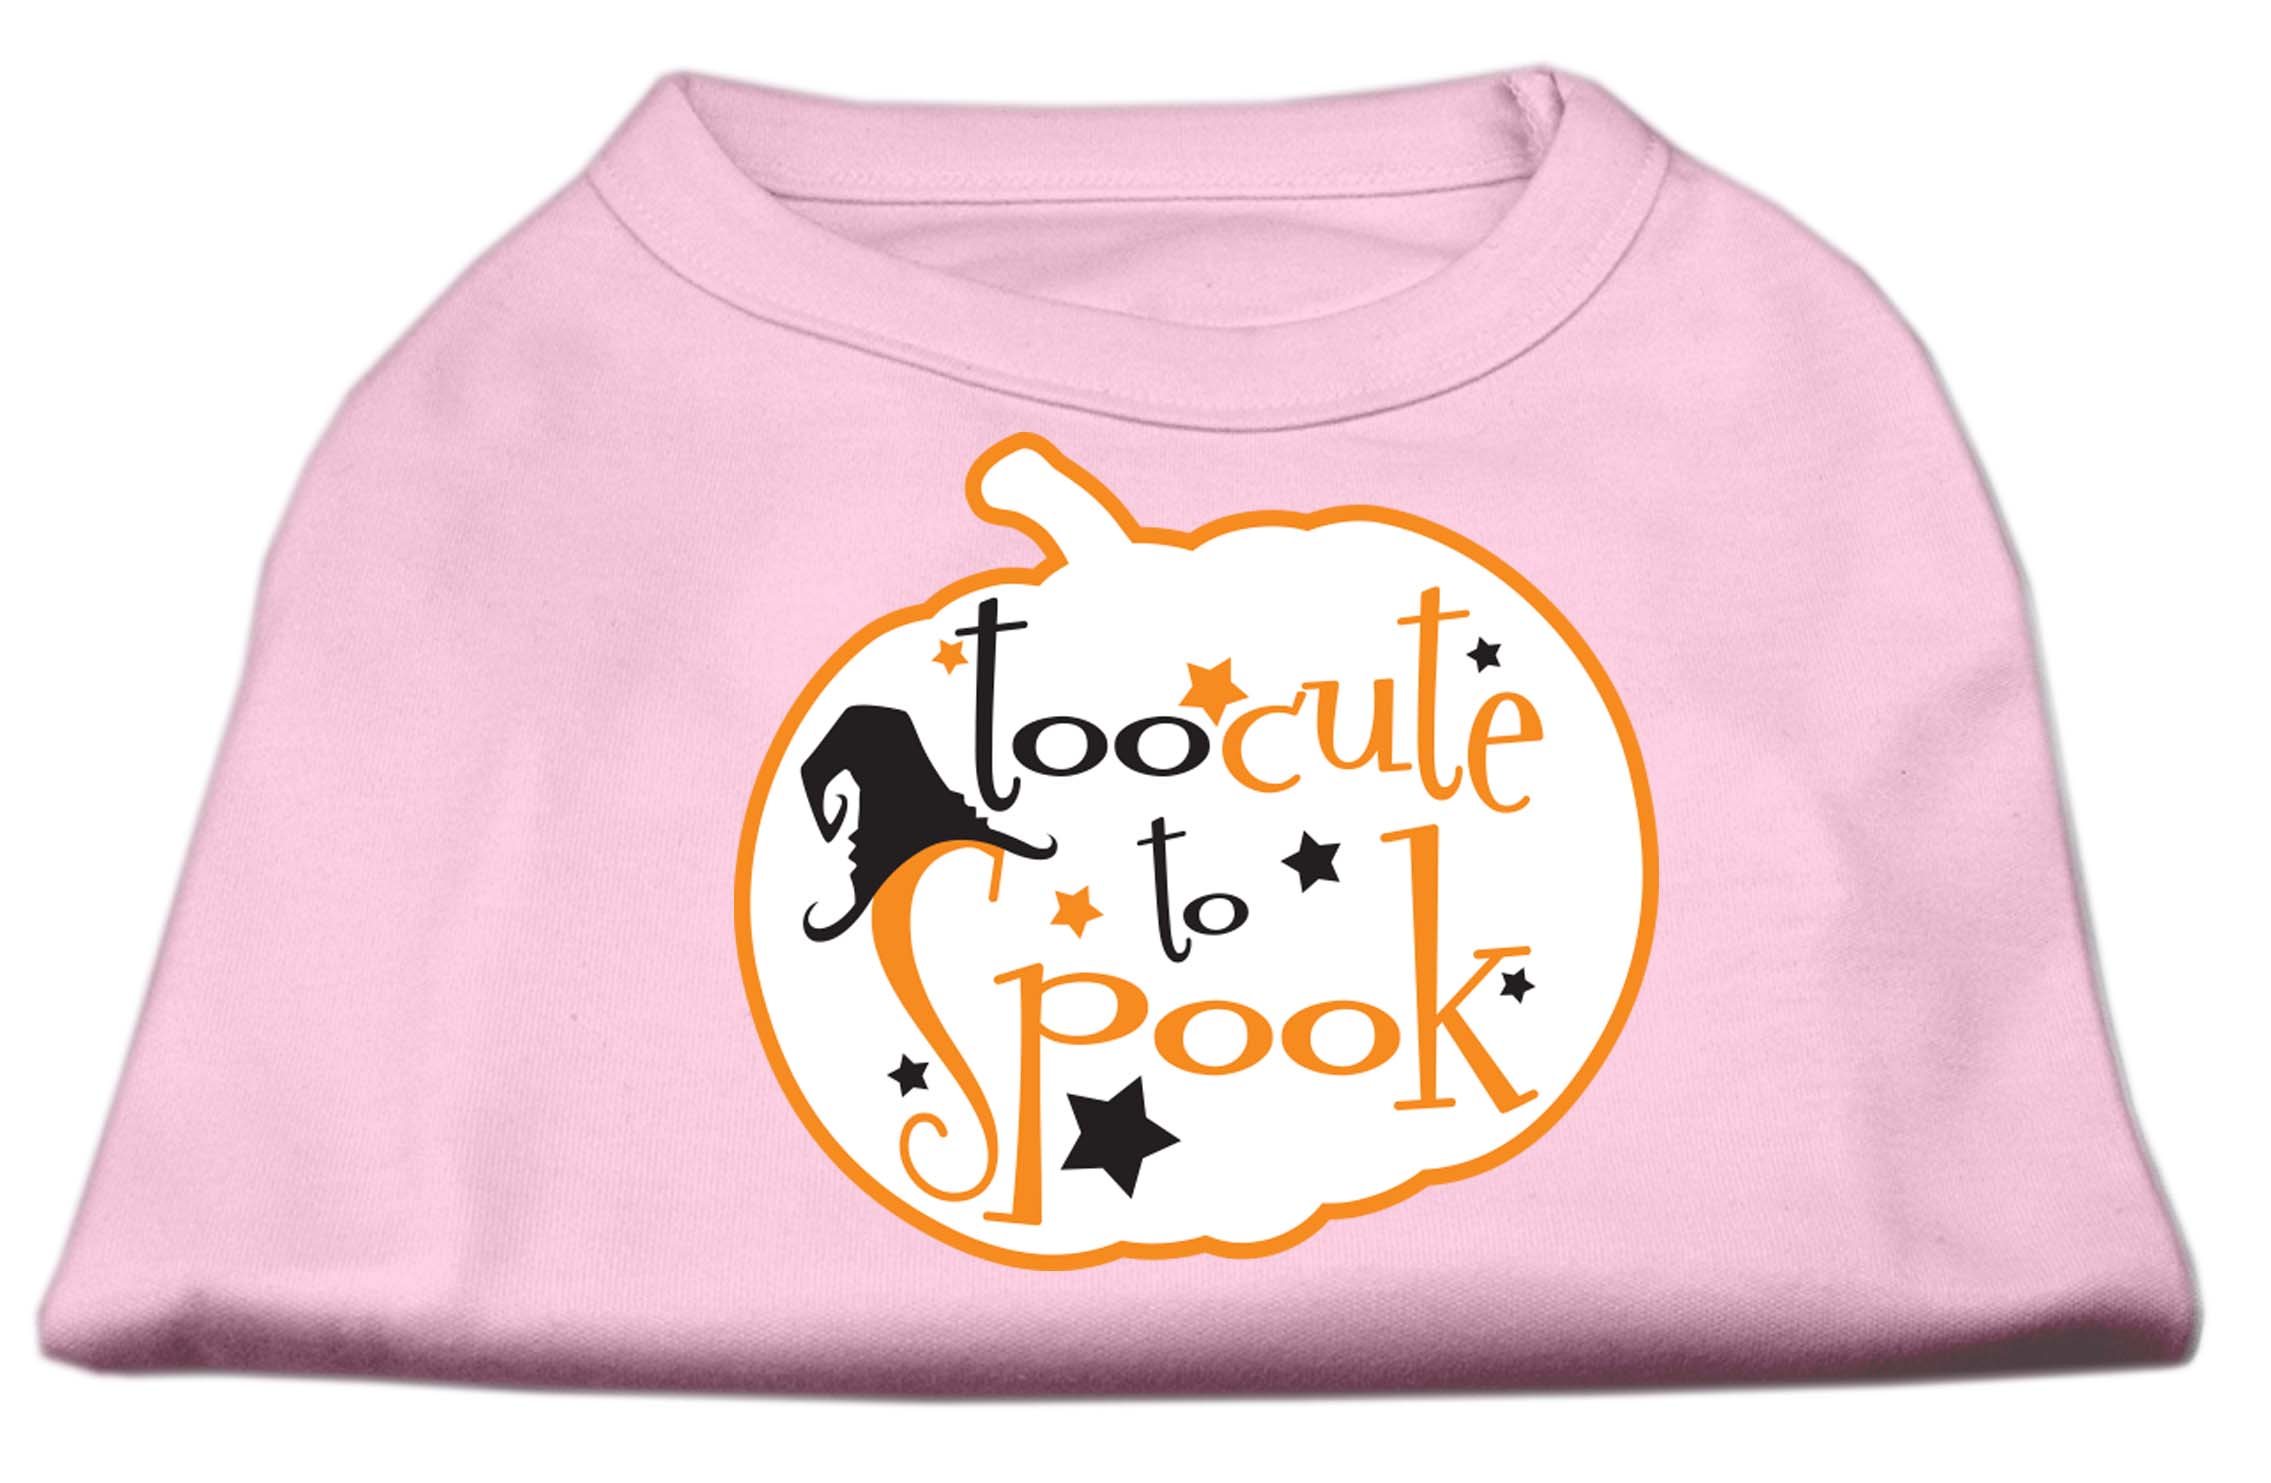 Too Cute to Spook Screen Print Dog Shirt Light Pink XL